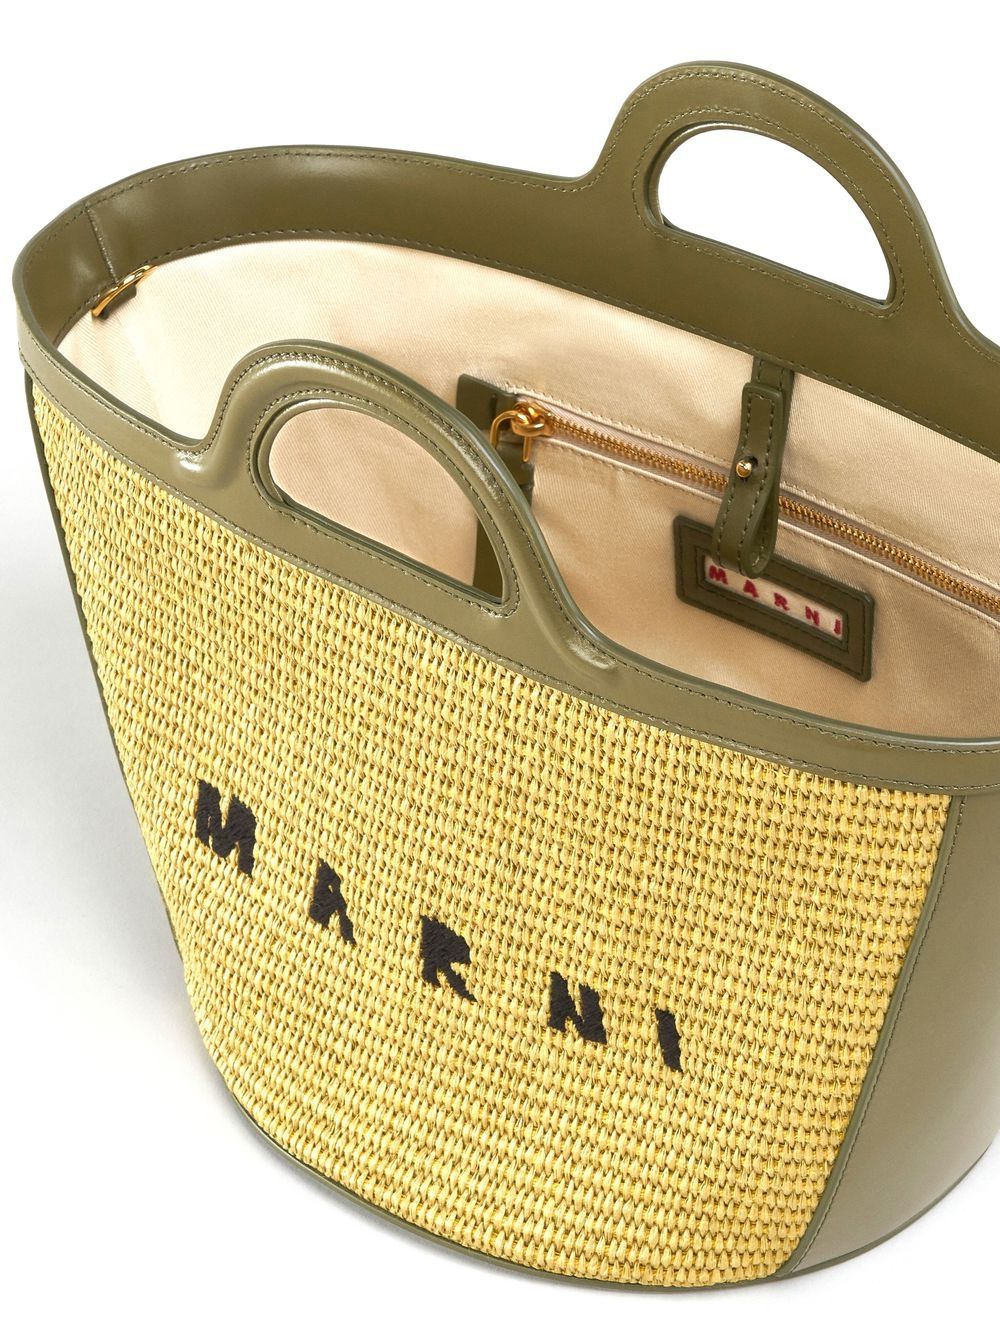 Marni Mini Tropicalia Tote Bag - Farfetch